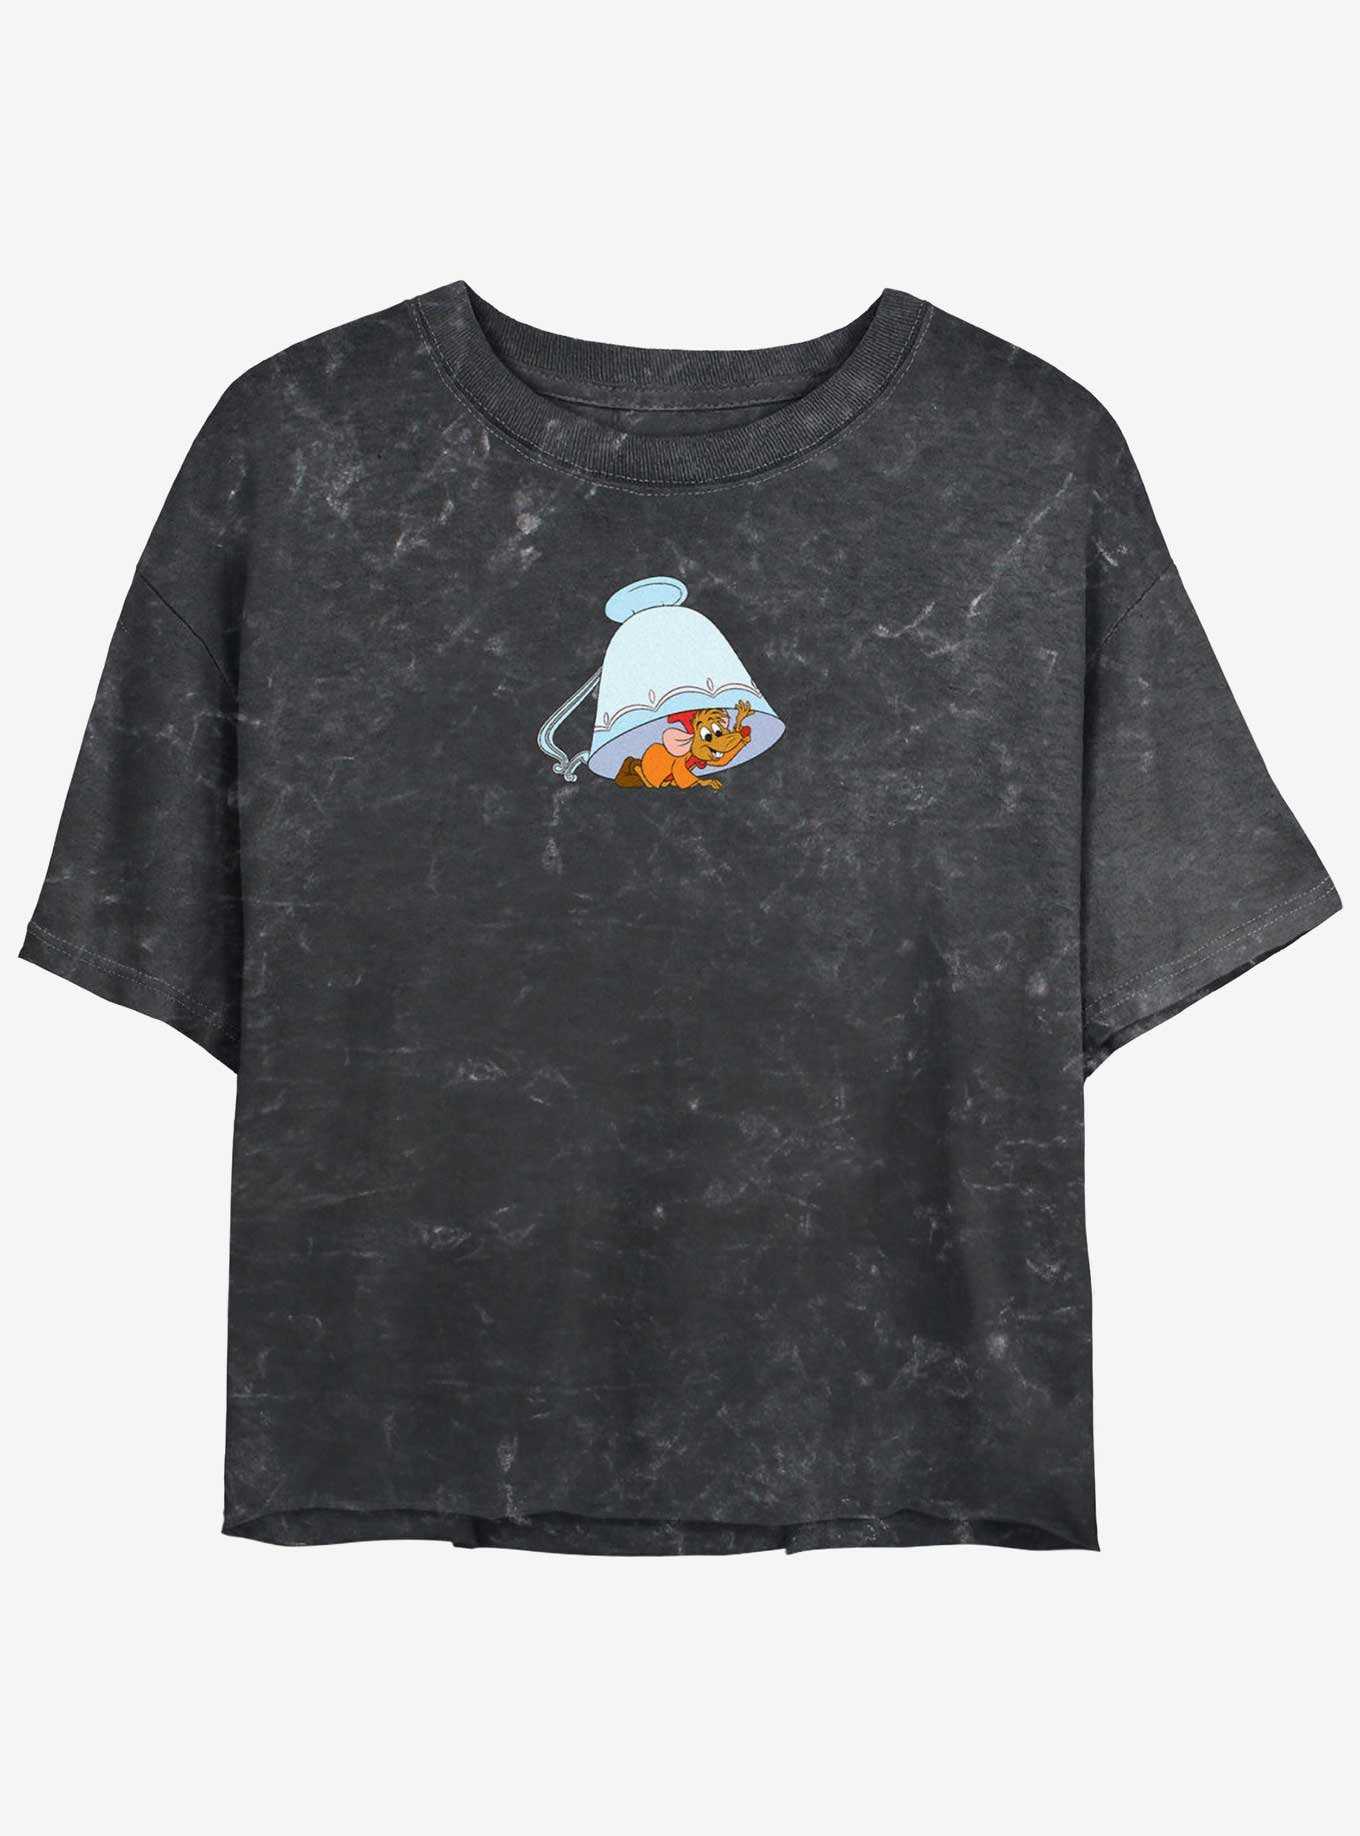 Disney Cinderella Jaq Under The Teacup Girls Mineral Wash Crop T-Shirt, , hi-res